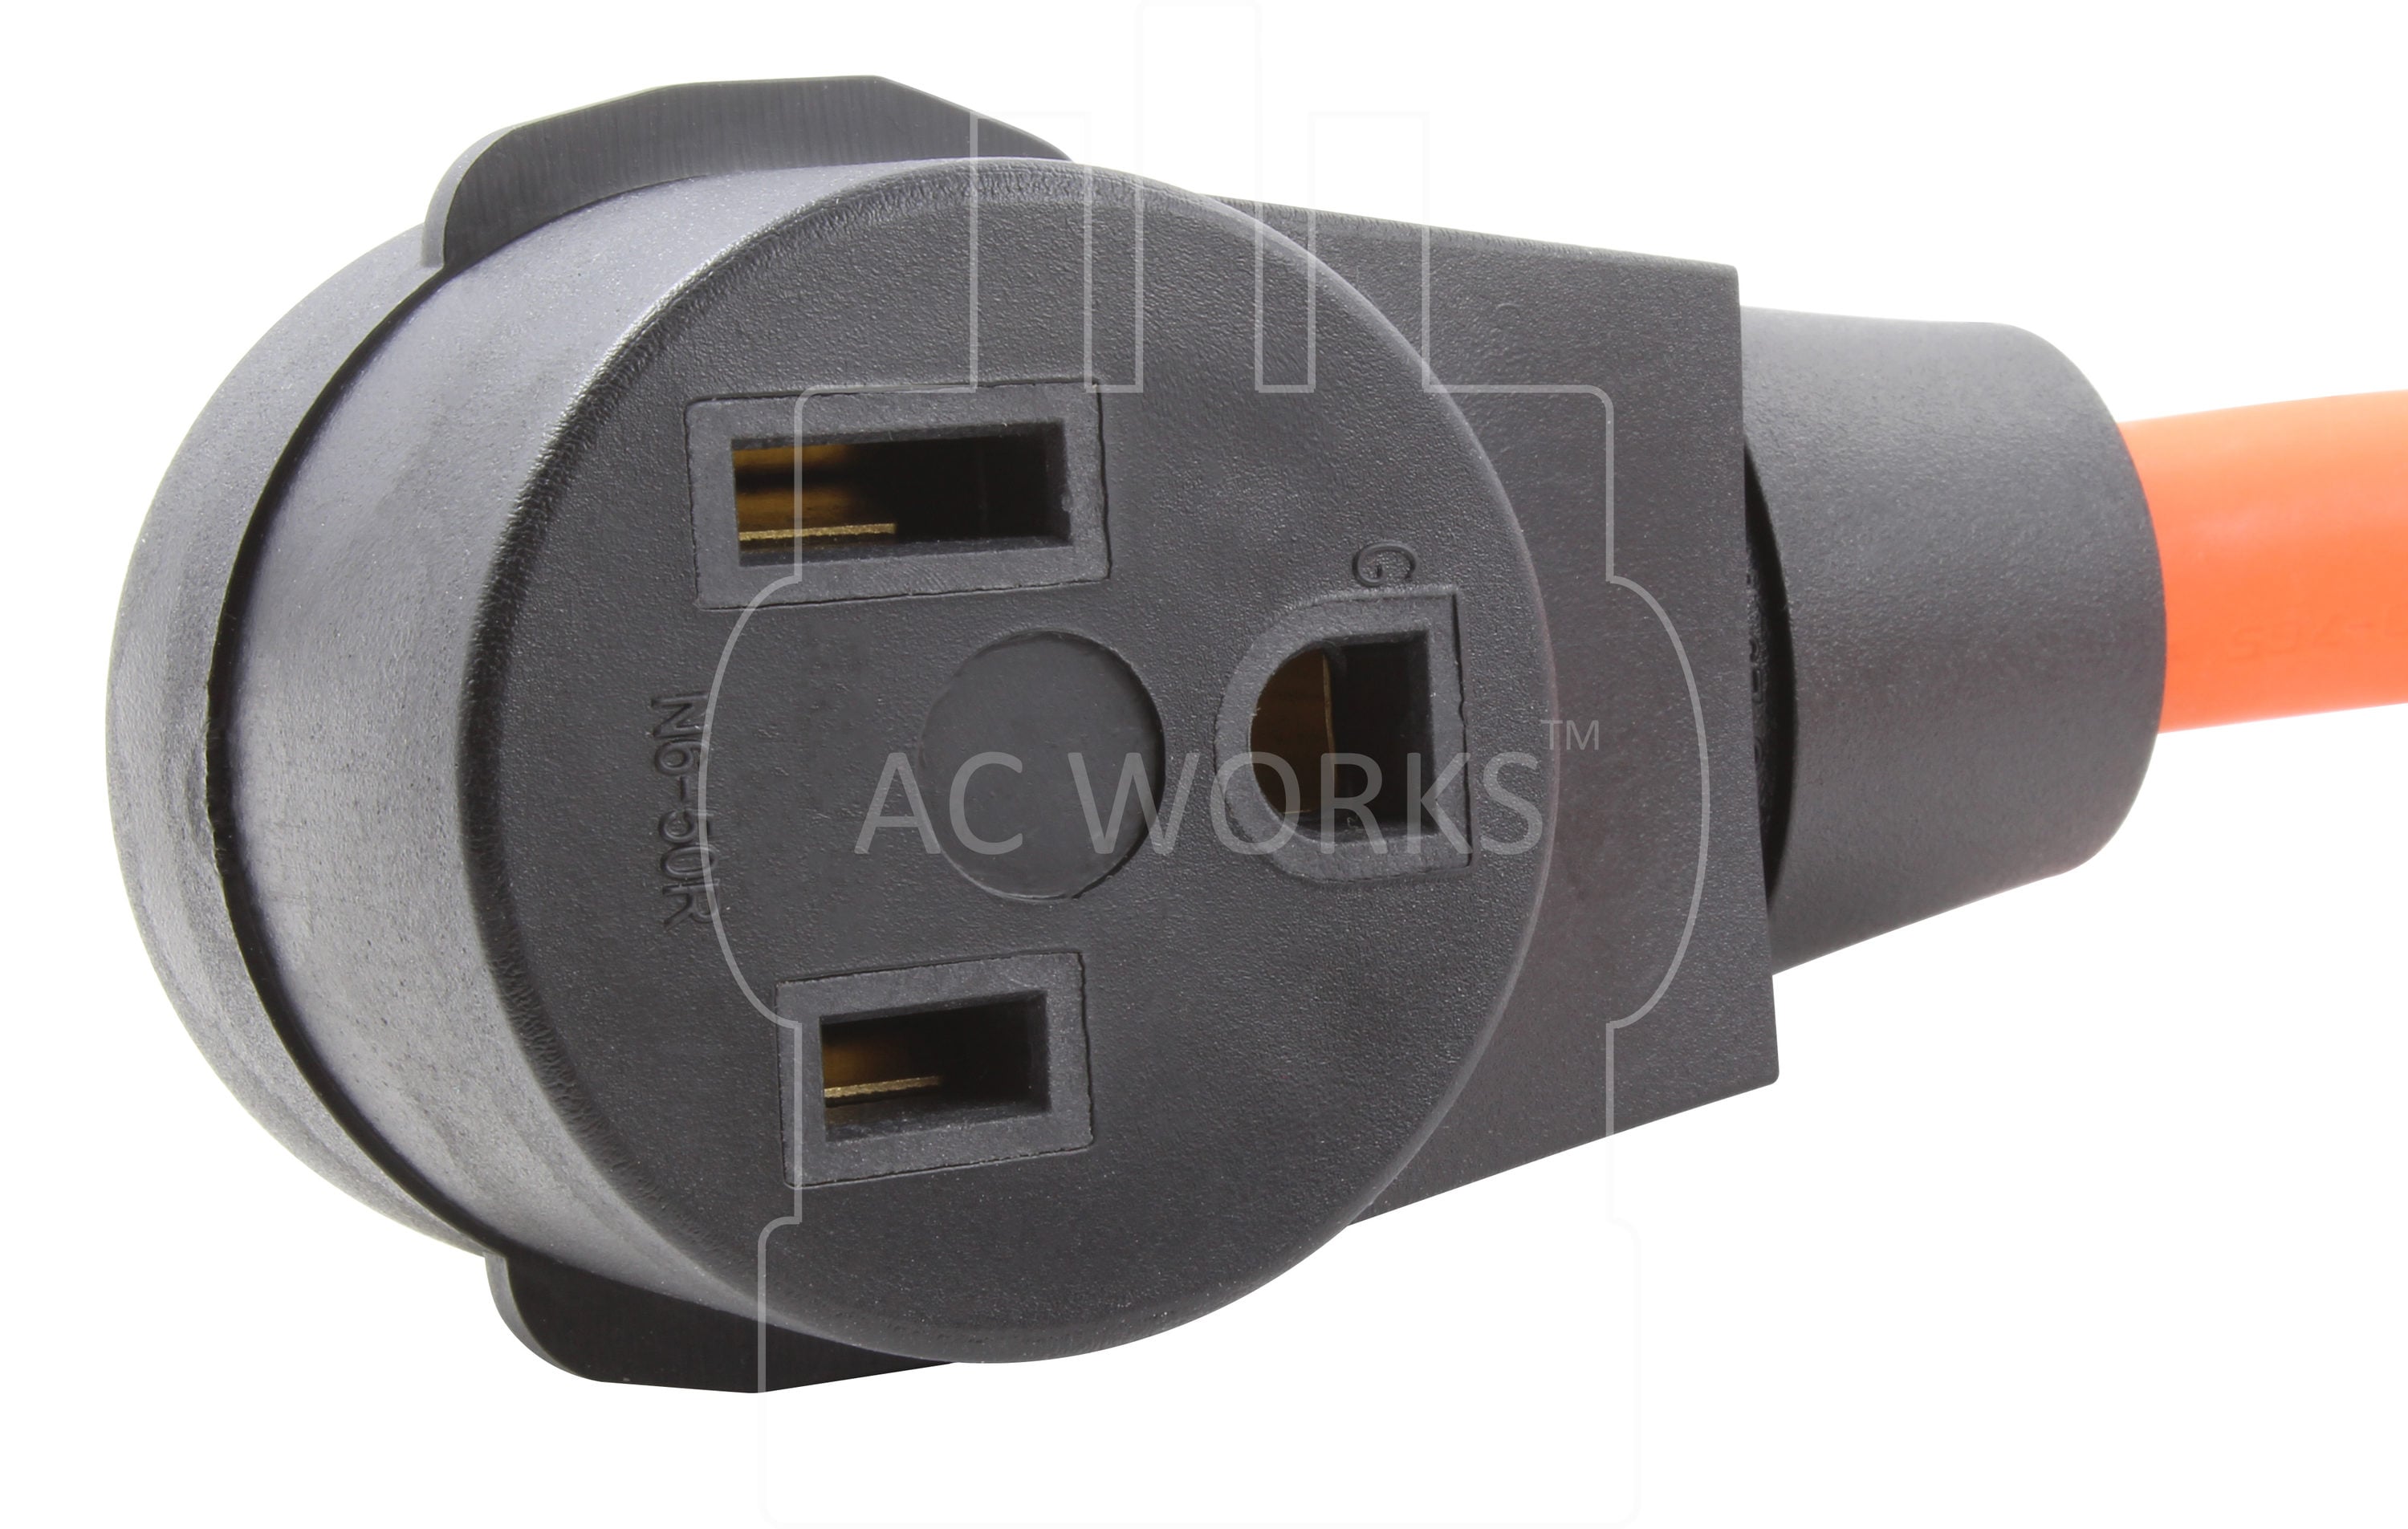 Generator Welder Adapter Cord Outlet Plug L14-30 4-Prong NEMA 6-50R L1430650-018 